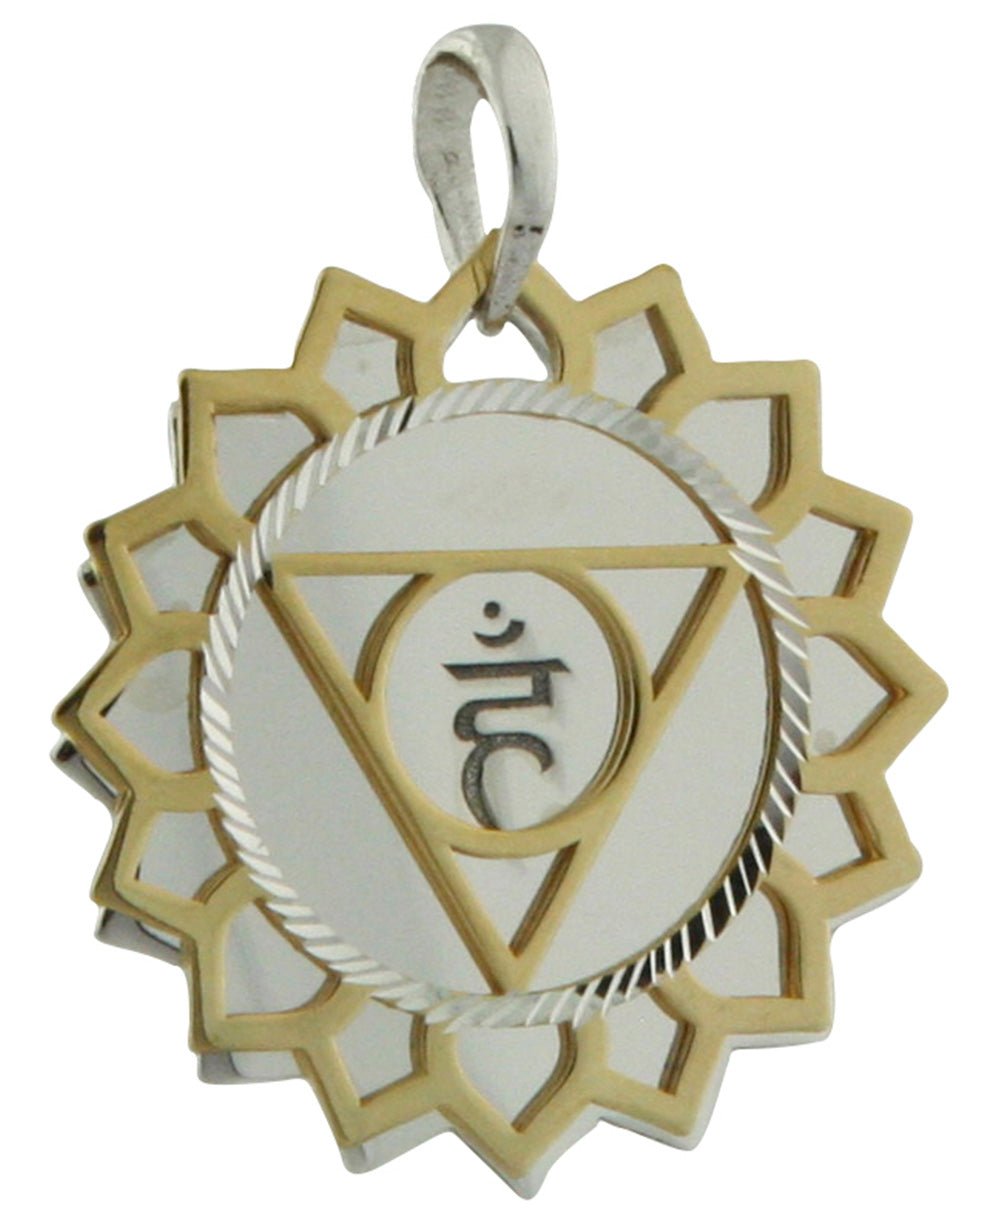 Chakra Jewelry Pendants in Silver and Gold Layered Style - Pendant Throat Chakra